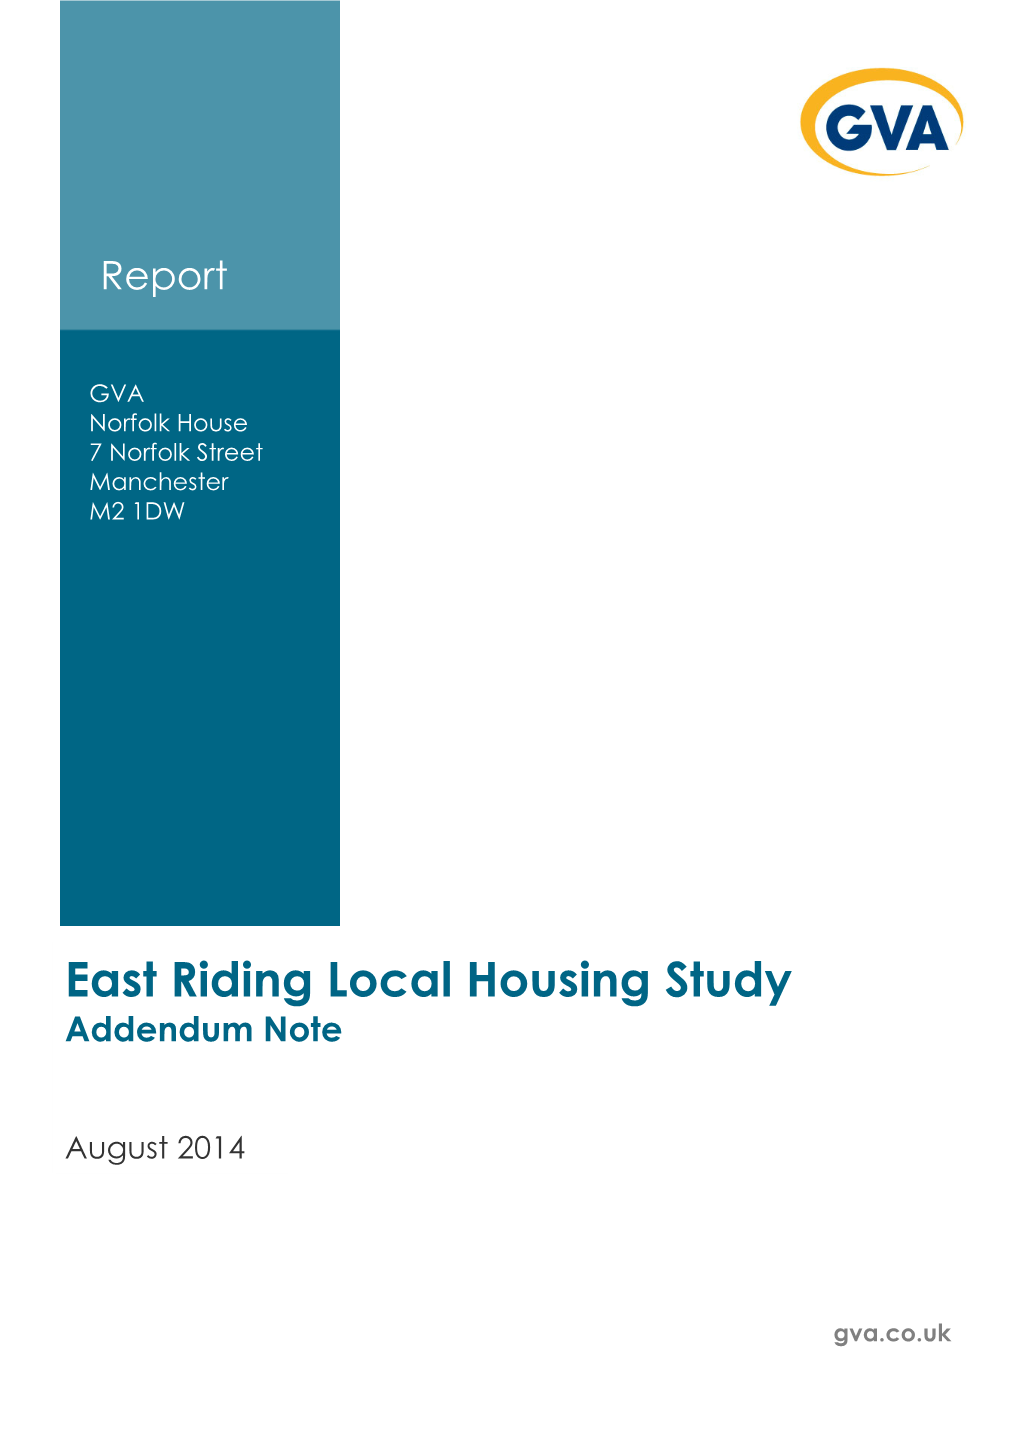 East Riding Local Housing Study Addendum Note